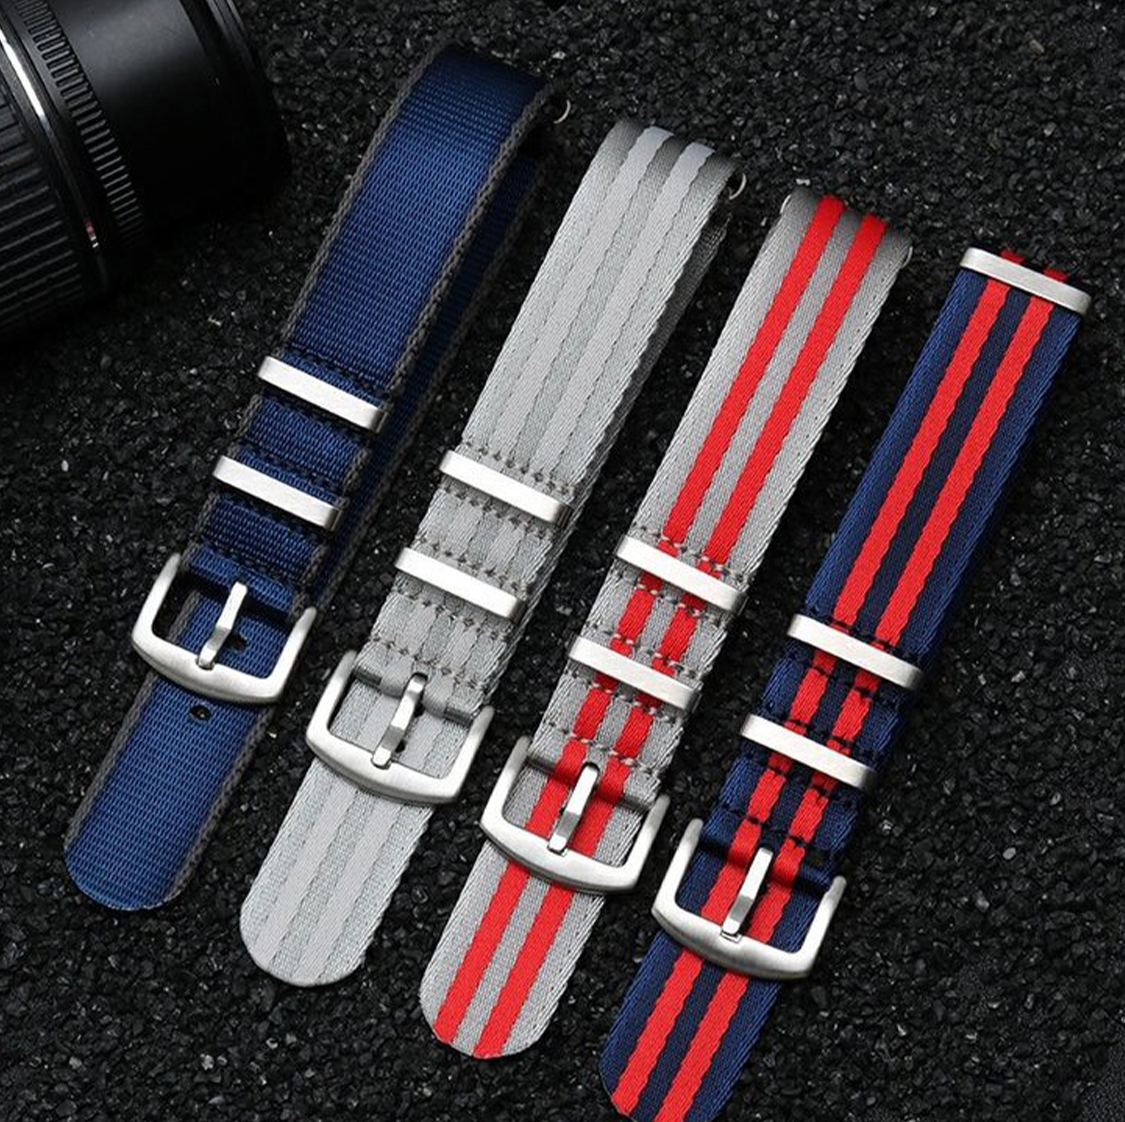 Seatbelt Ballistic Nylon NATO Watch Strap Grey with Silver Stripe 